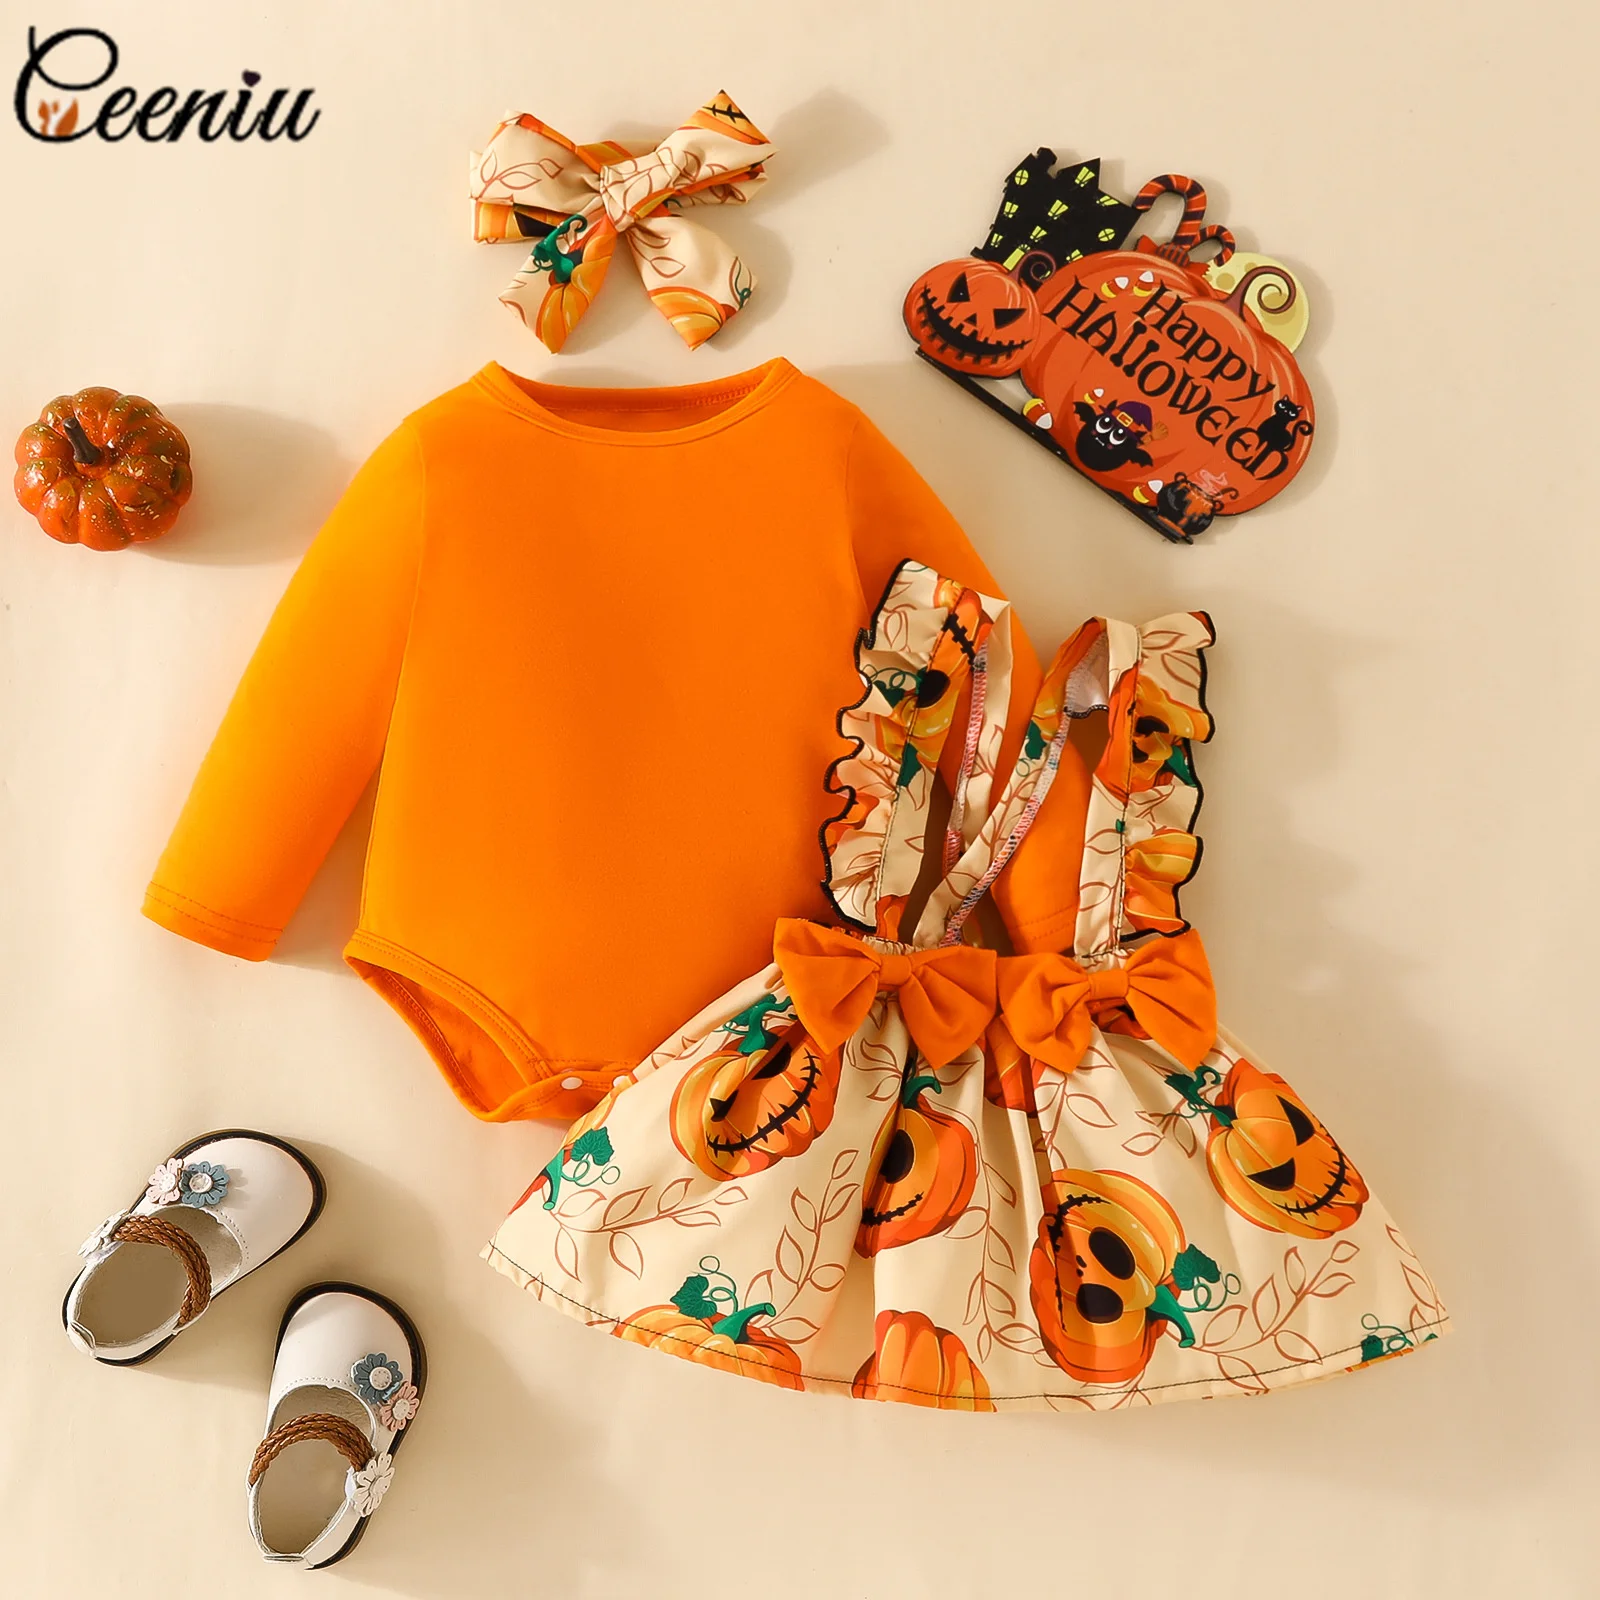 

Ceeniu 0-18M Halloween Baby Costume Pumpkin Romper and Suspender Orange Skirts My First Halloween Baby Outfit Clothes Girl Set